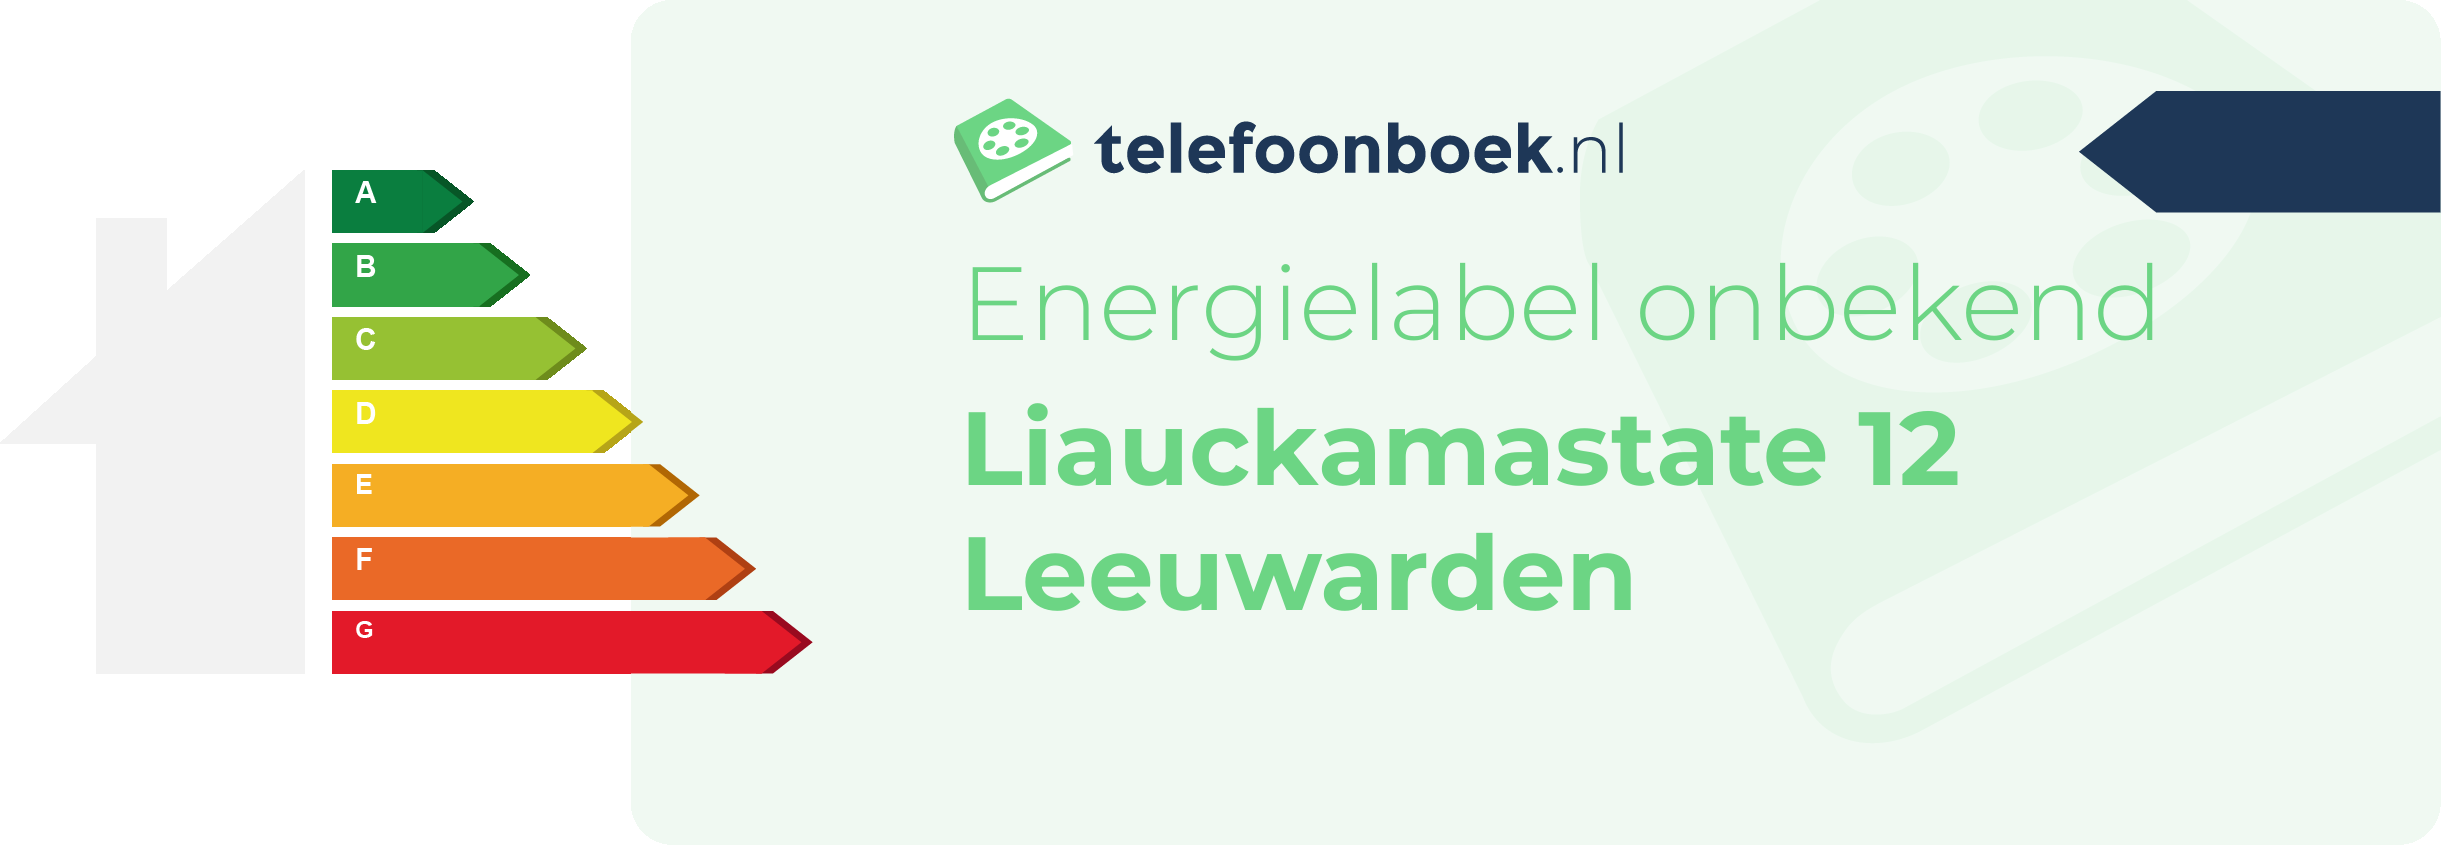 Energielabel Liauckamastate 12 Leeuwarden